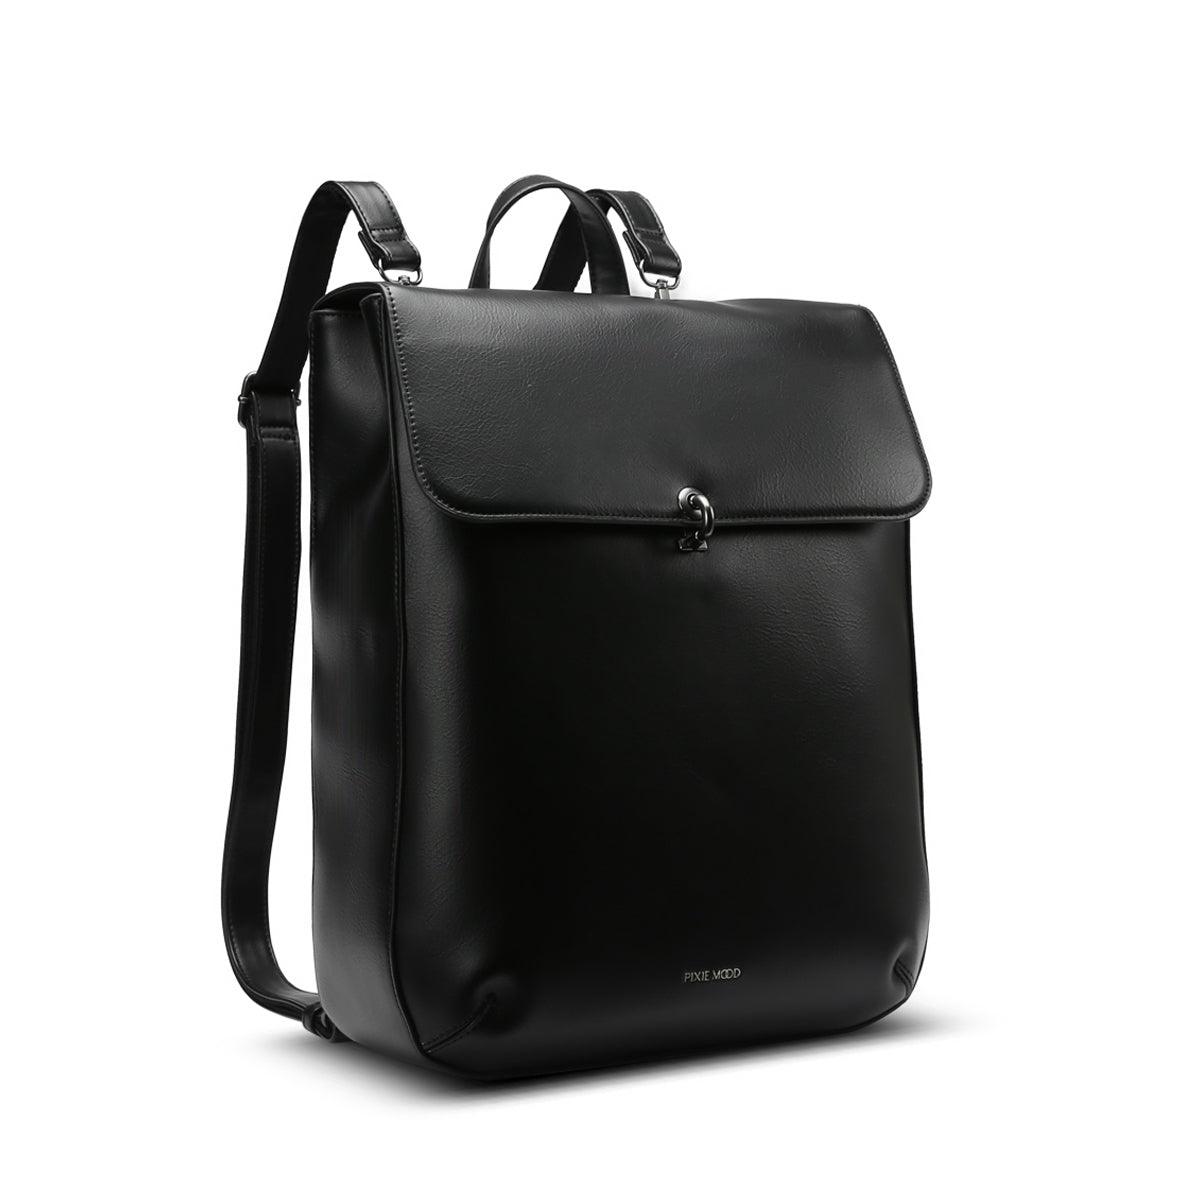 Nyla Recycled Vegan Leather Backpack Large - Pixie Mood